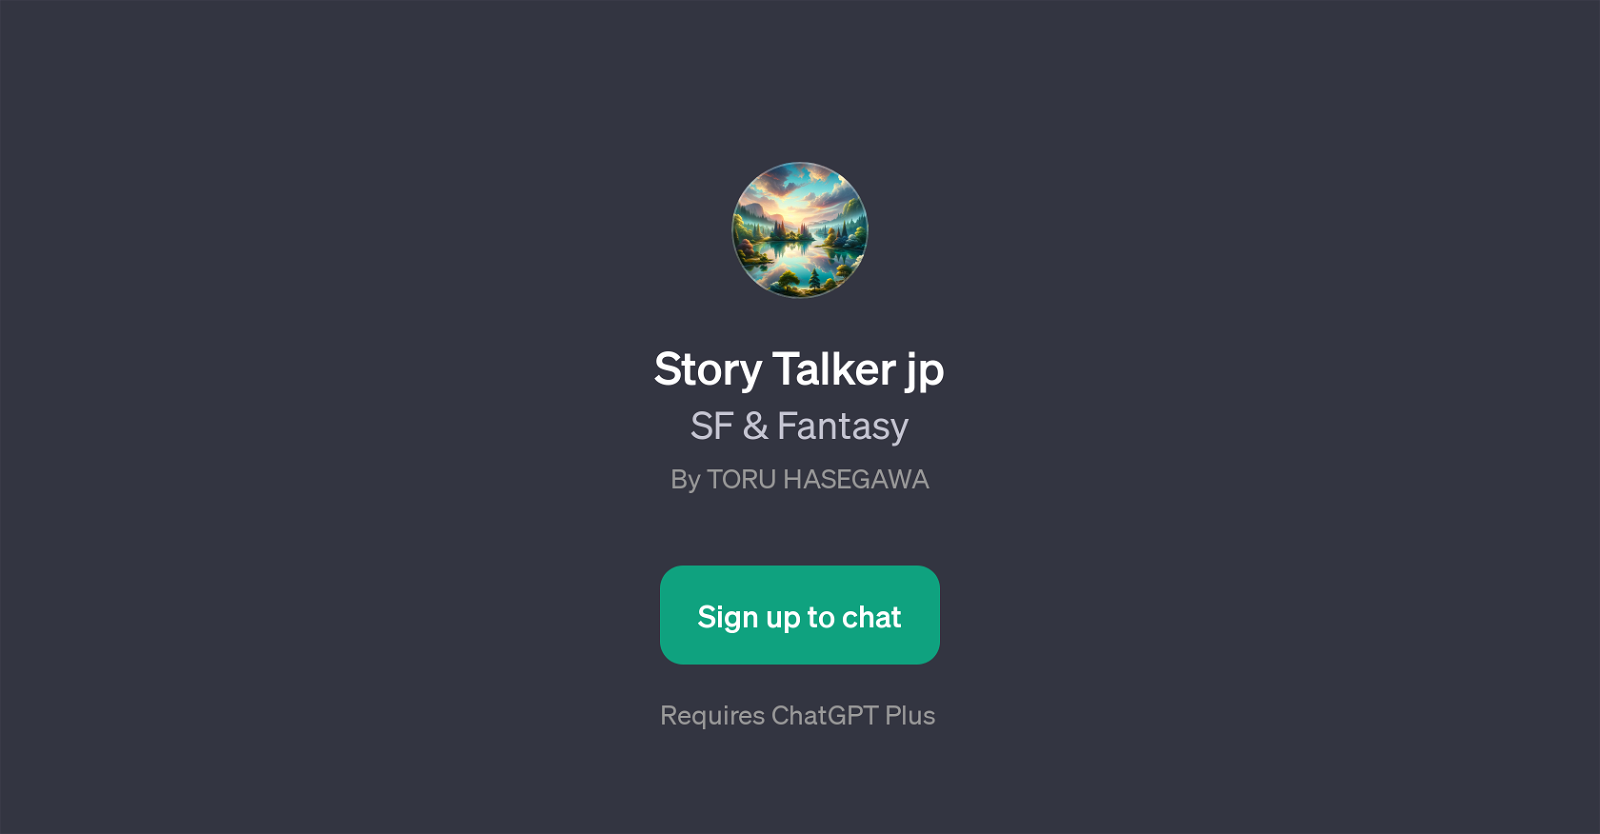 Story Talker jp website